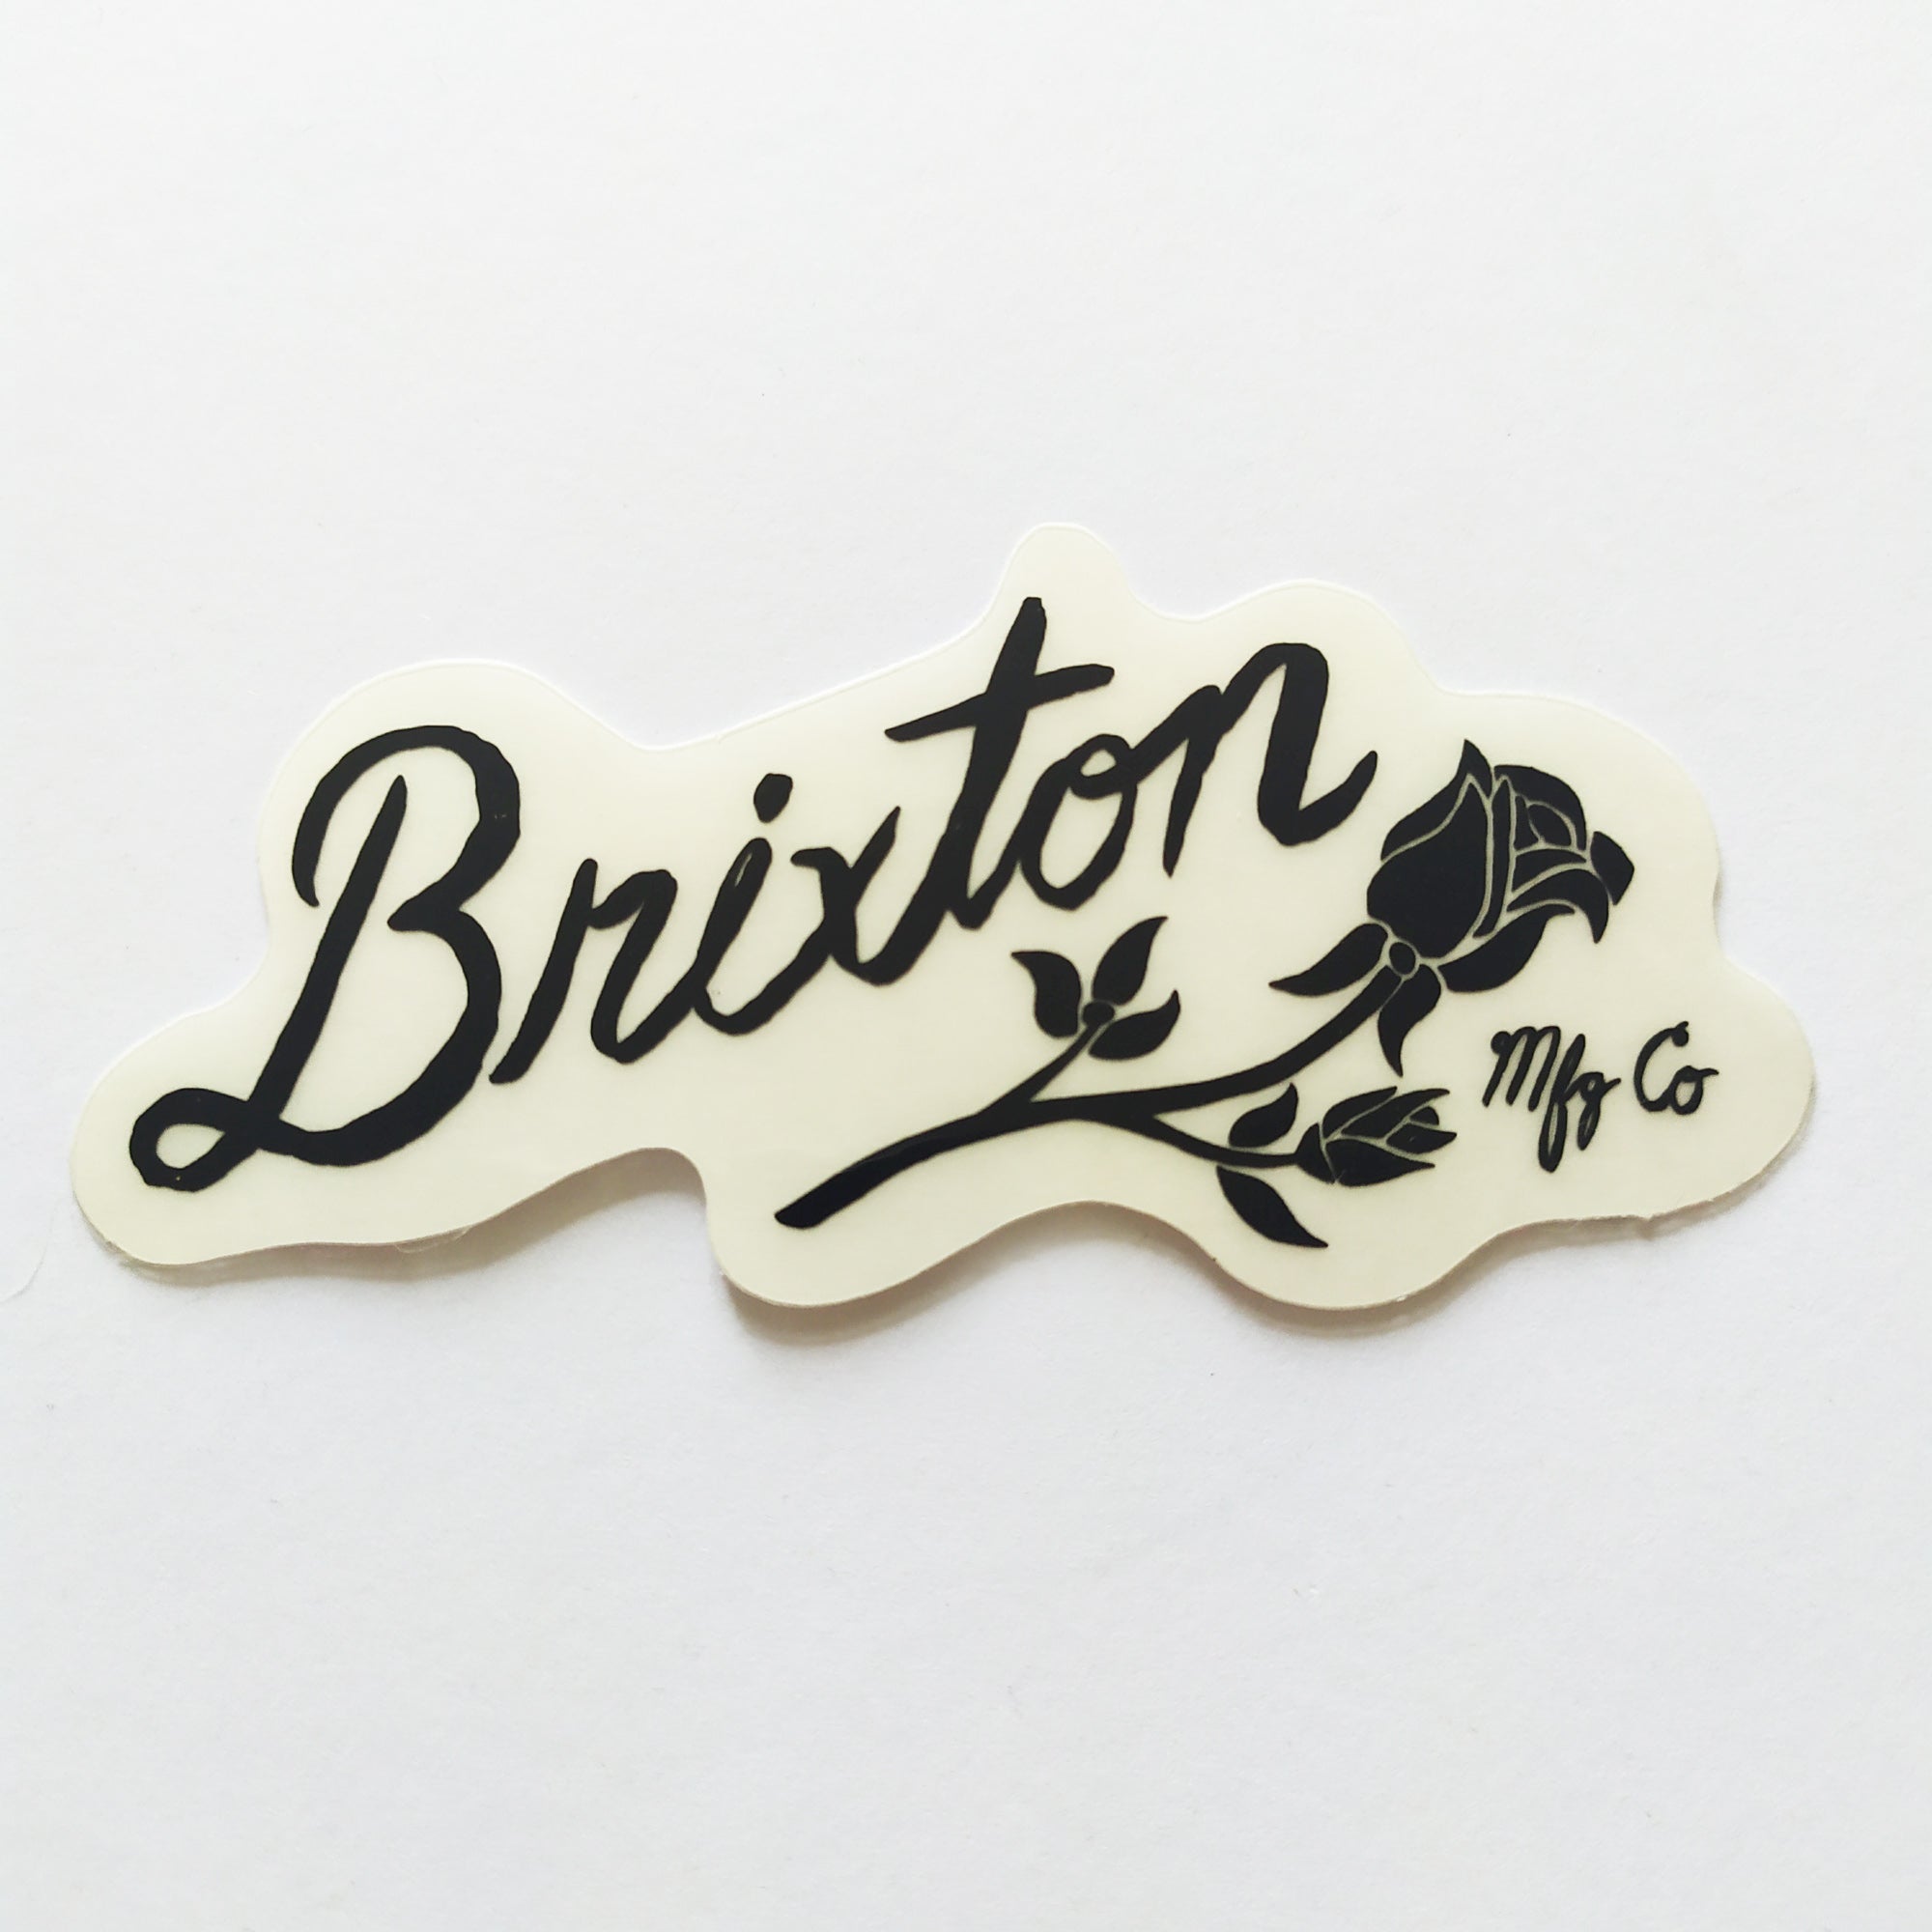 Brixton Clothing Skateboard Sticker - SkateboardStickers.com